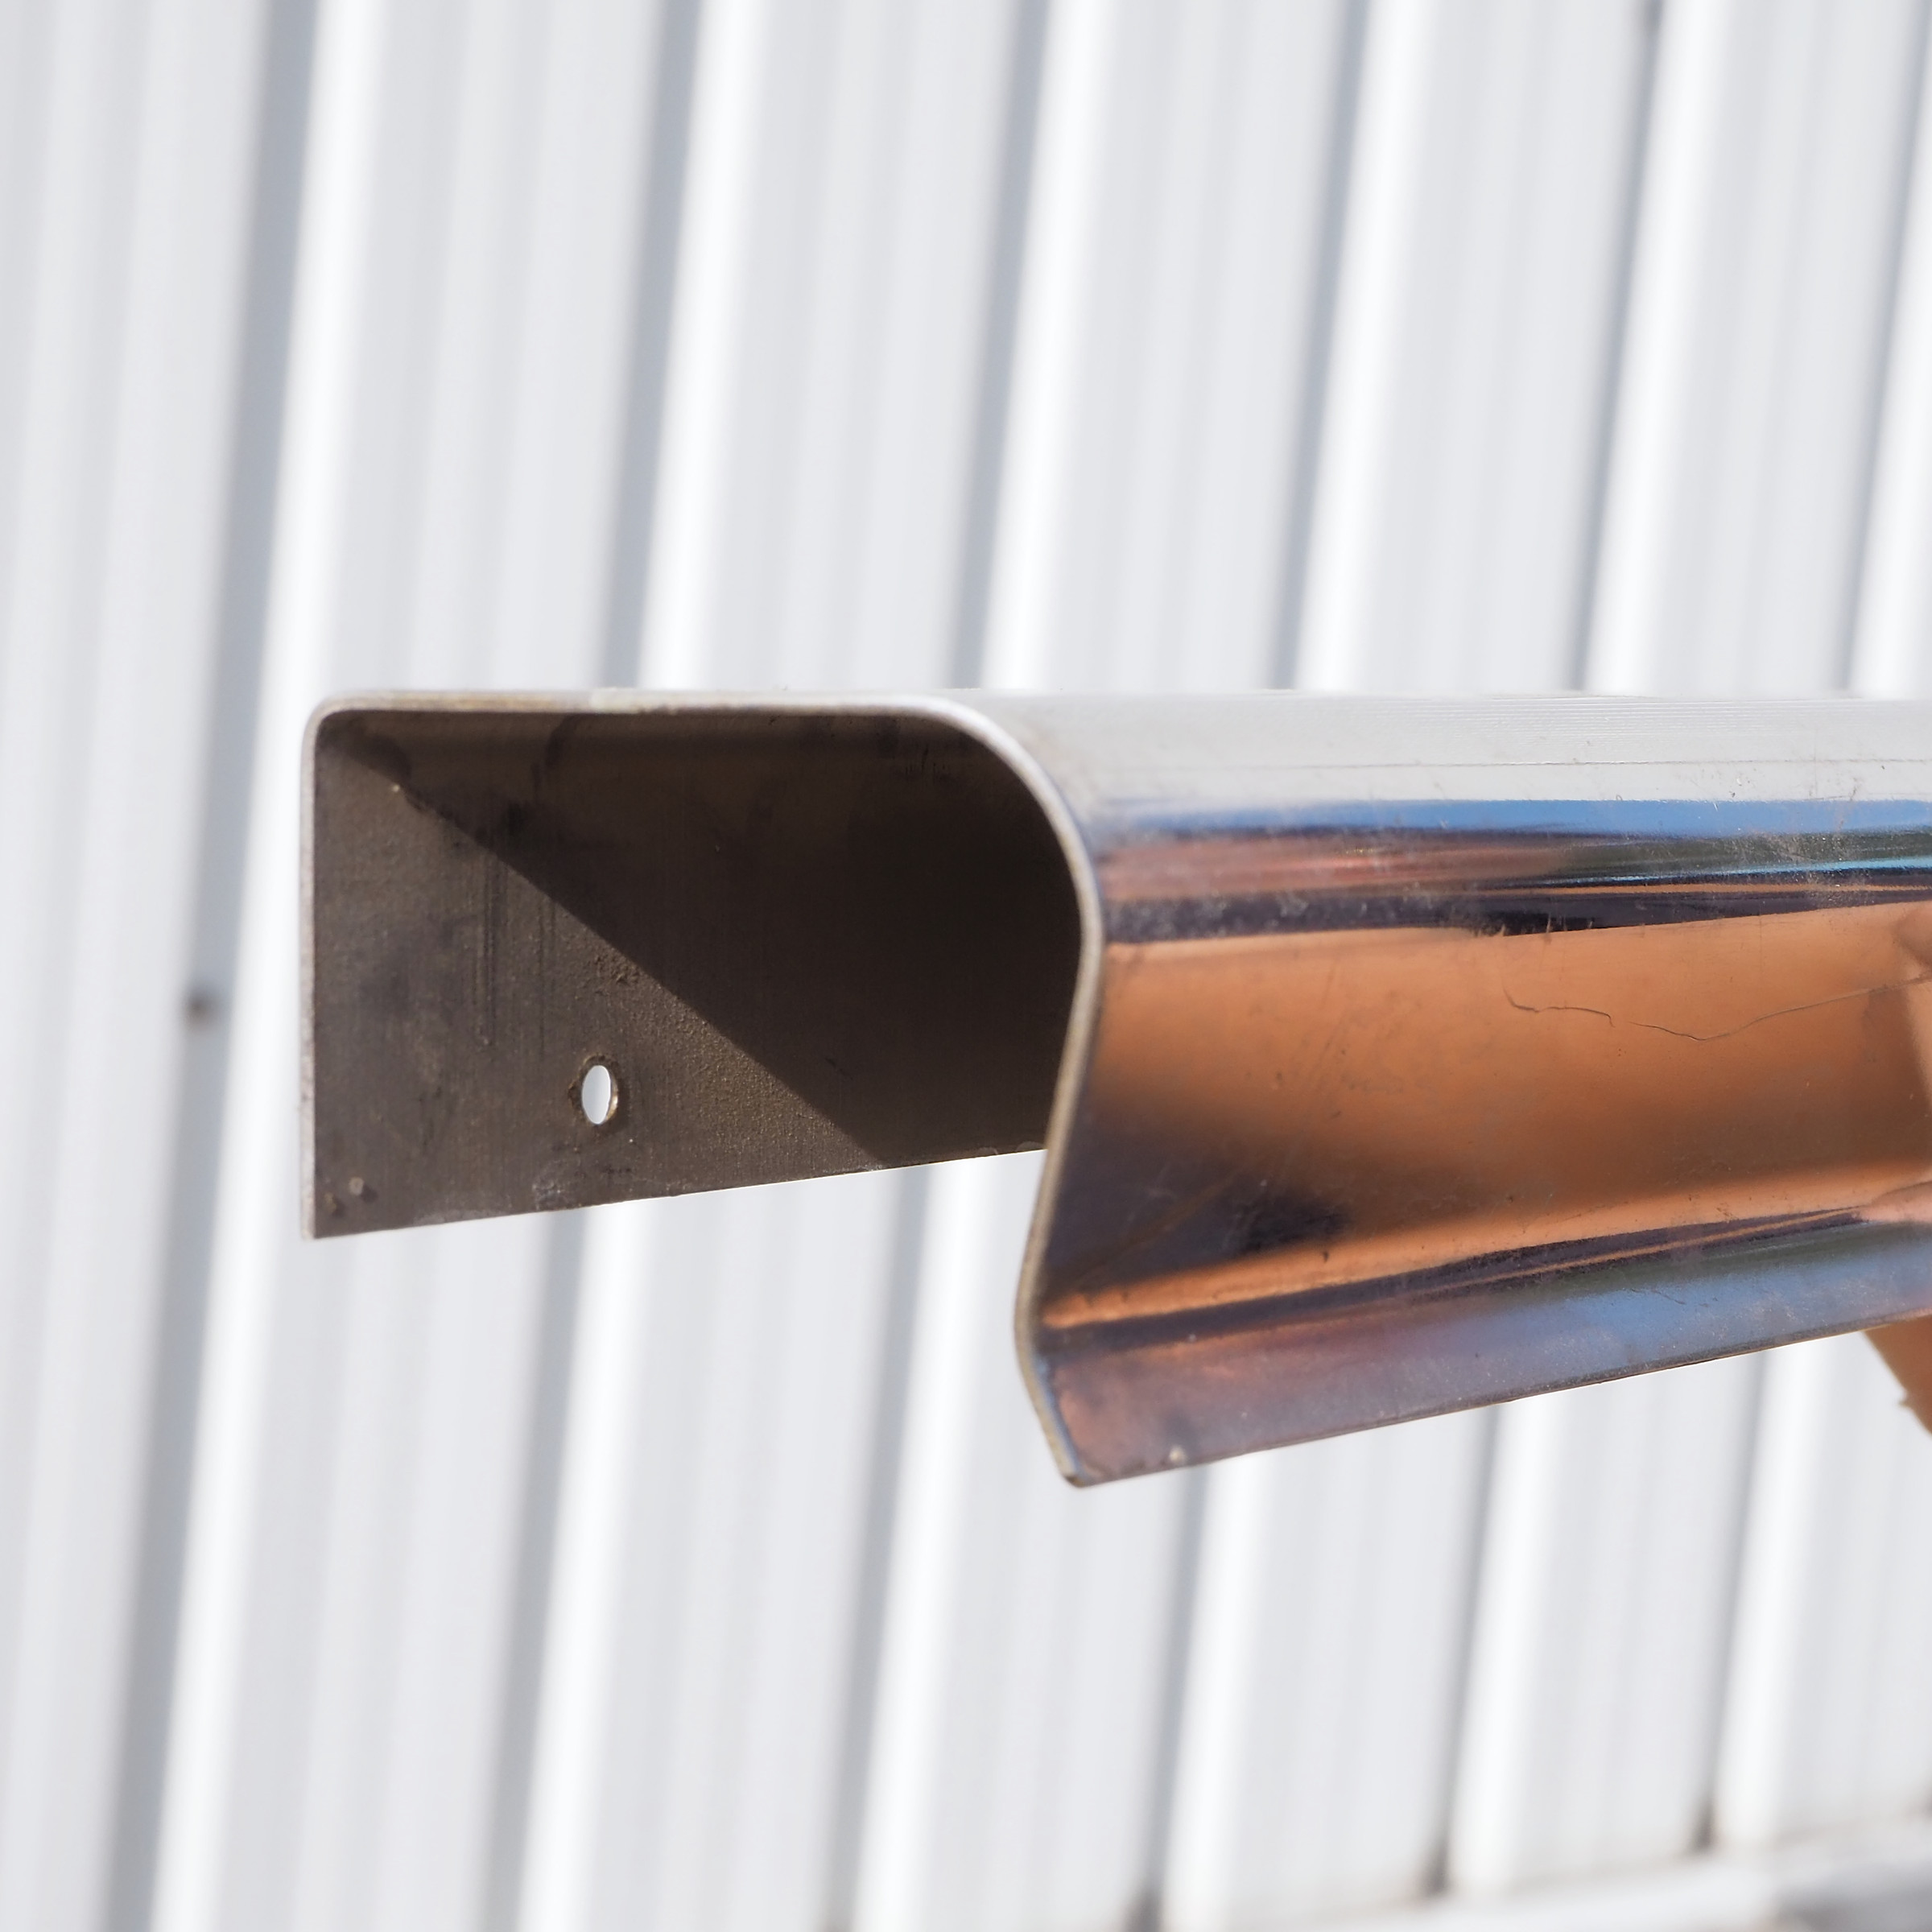 Profiled handle from Ledeganck building (L. 68 cm to 74 cm)